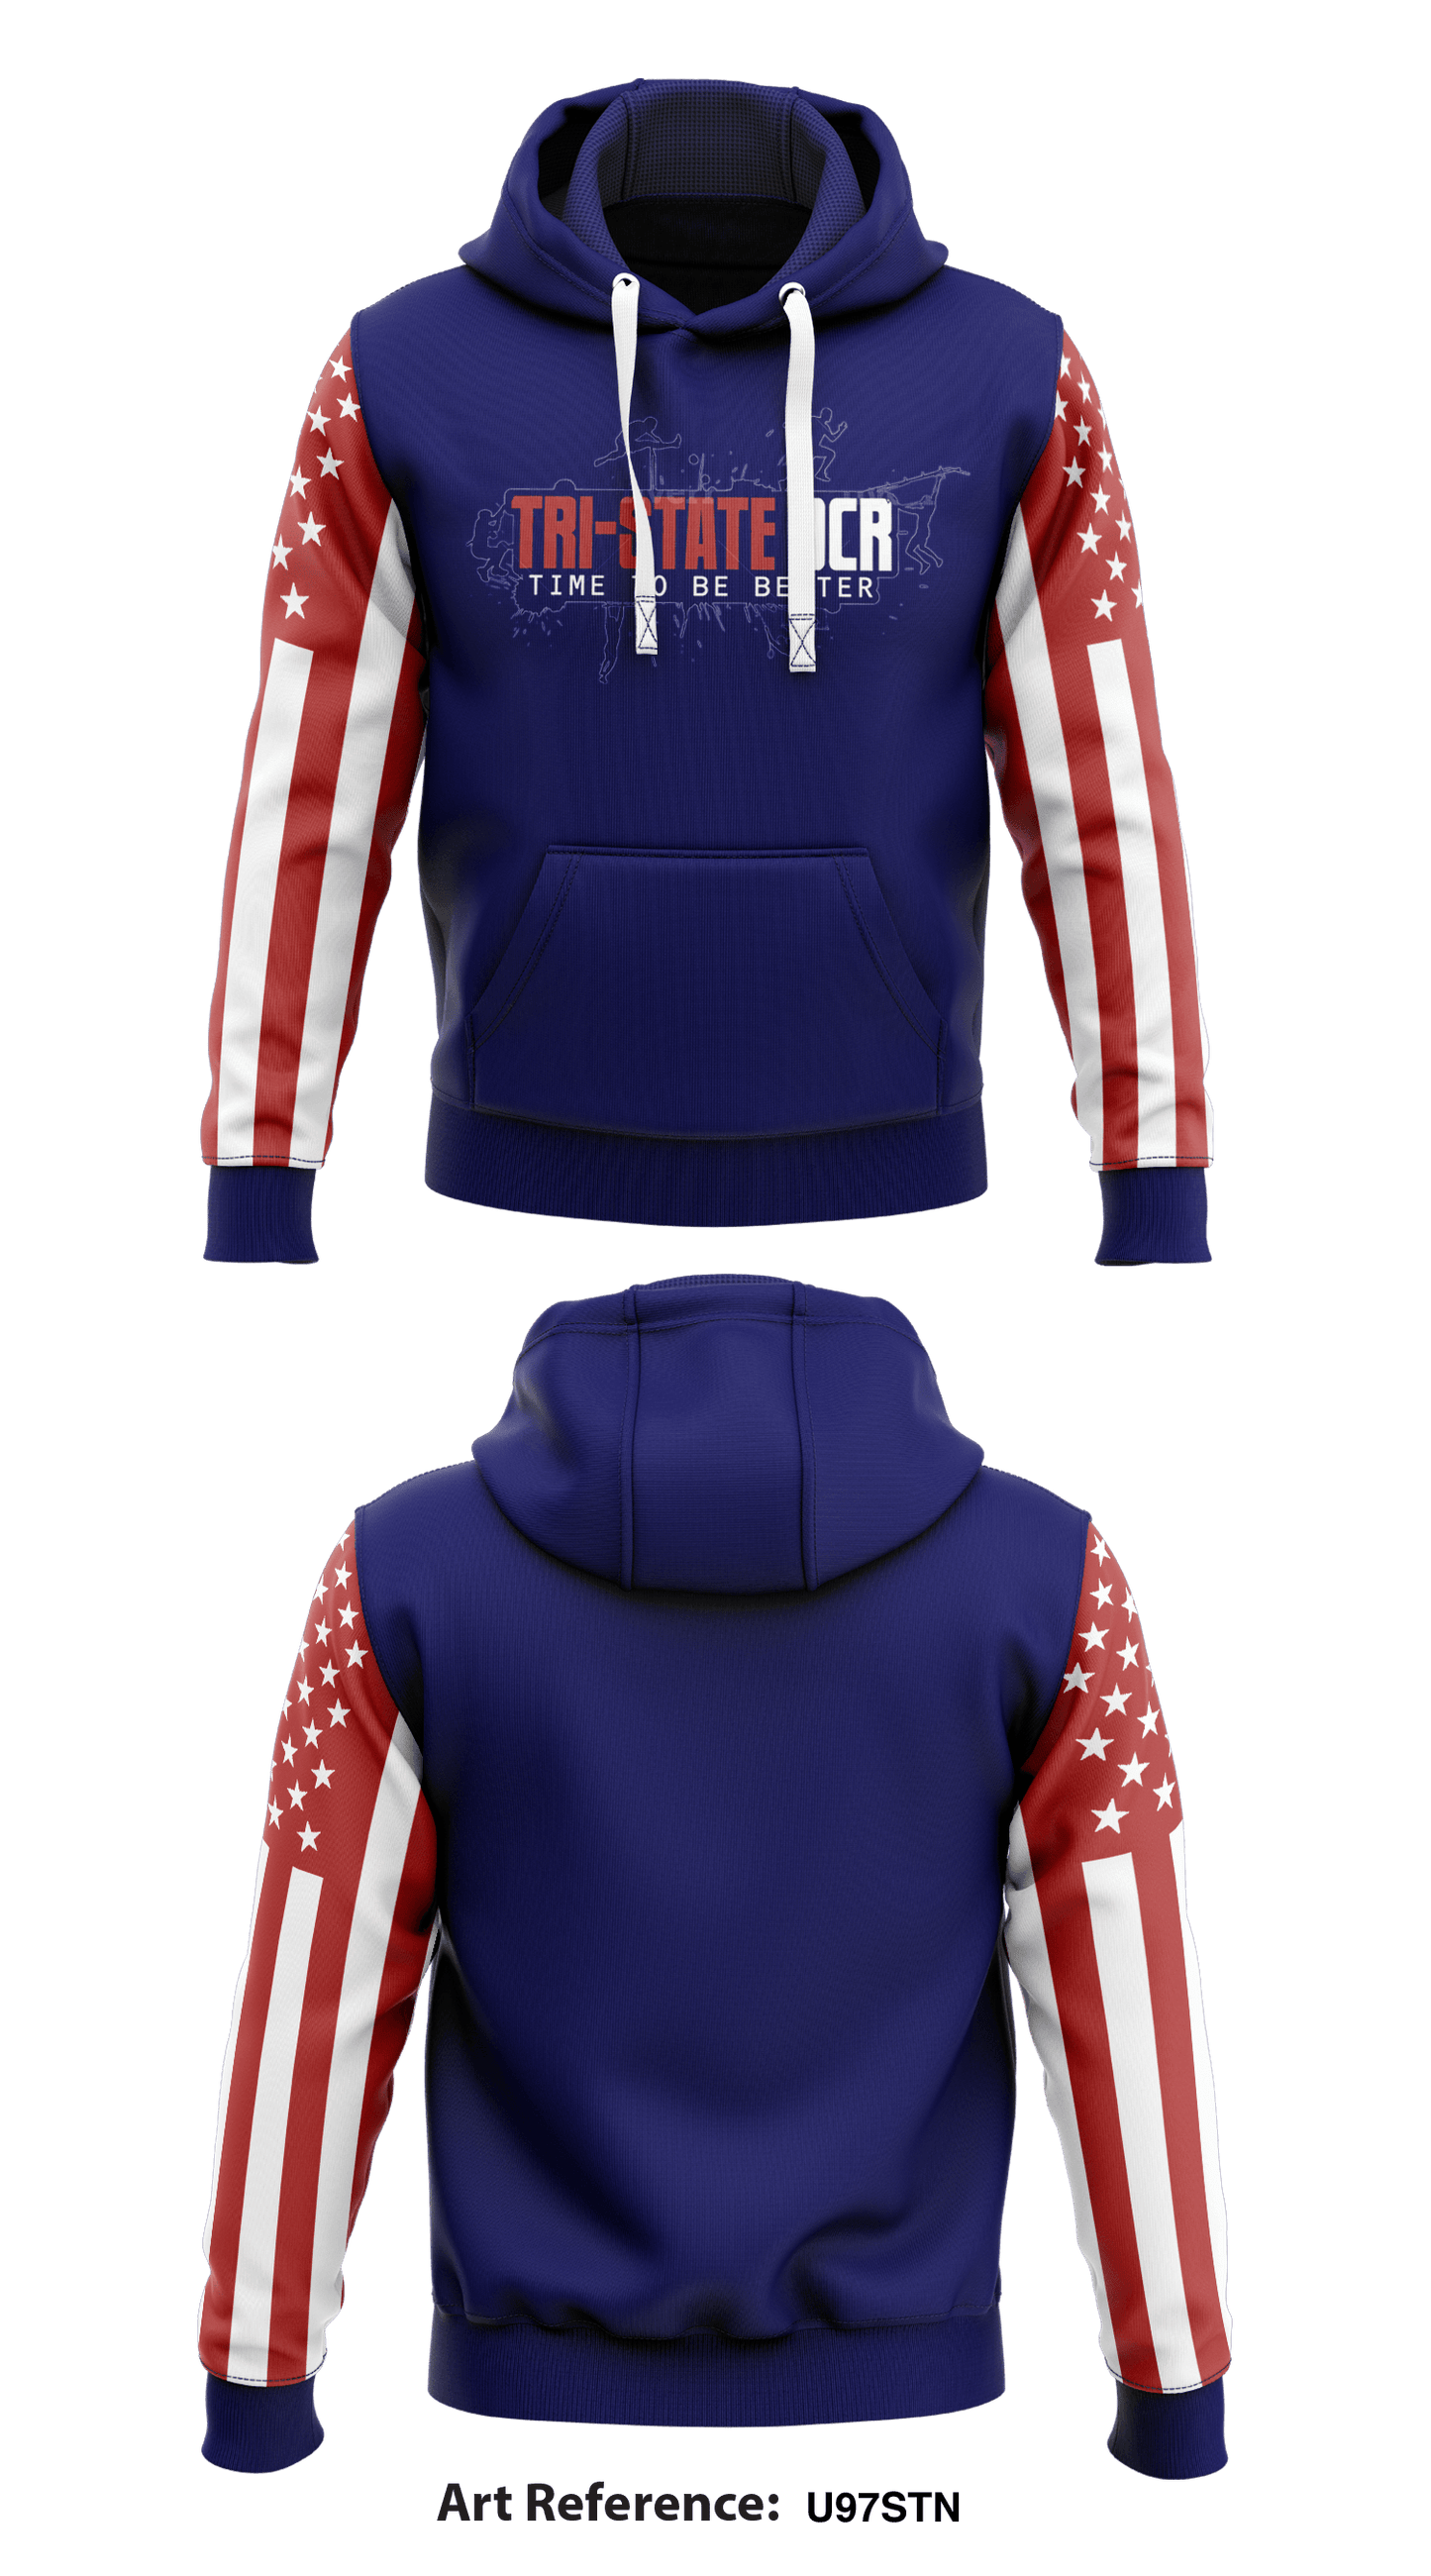 Tri-State OCR  Core Men's Hooded Performance Sweatshirt - U97sTn